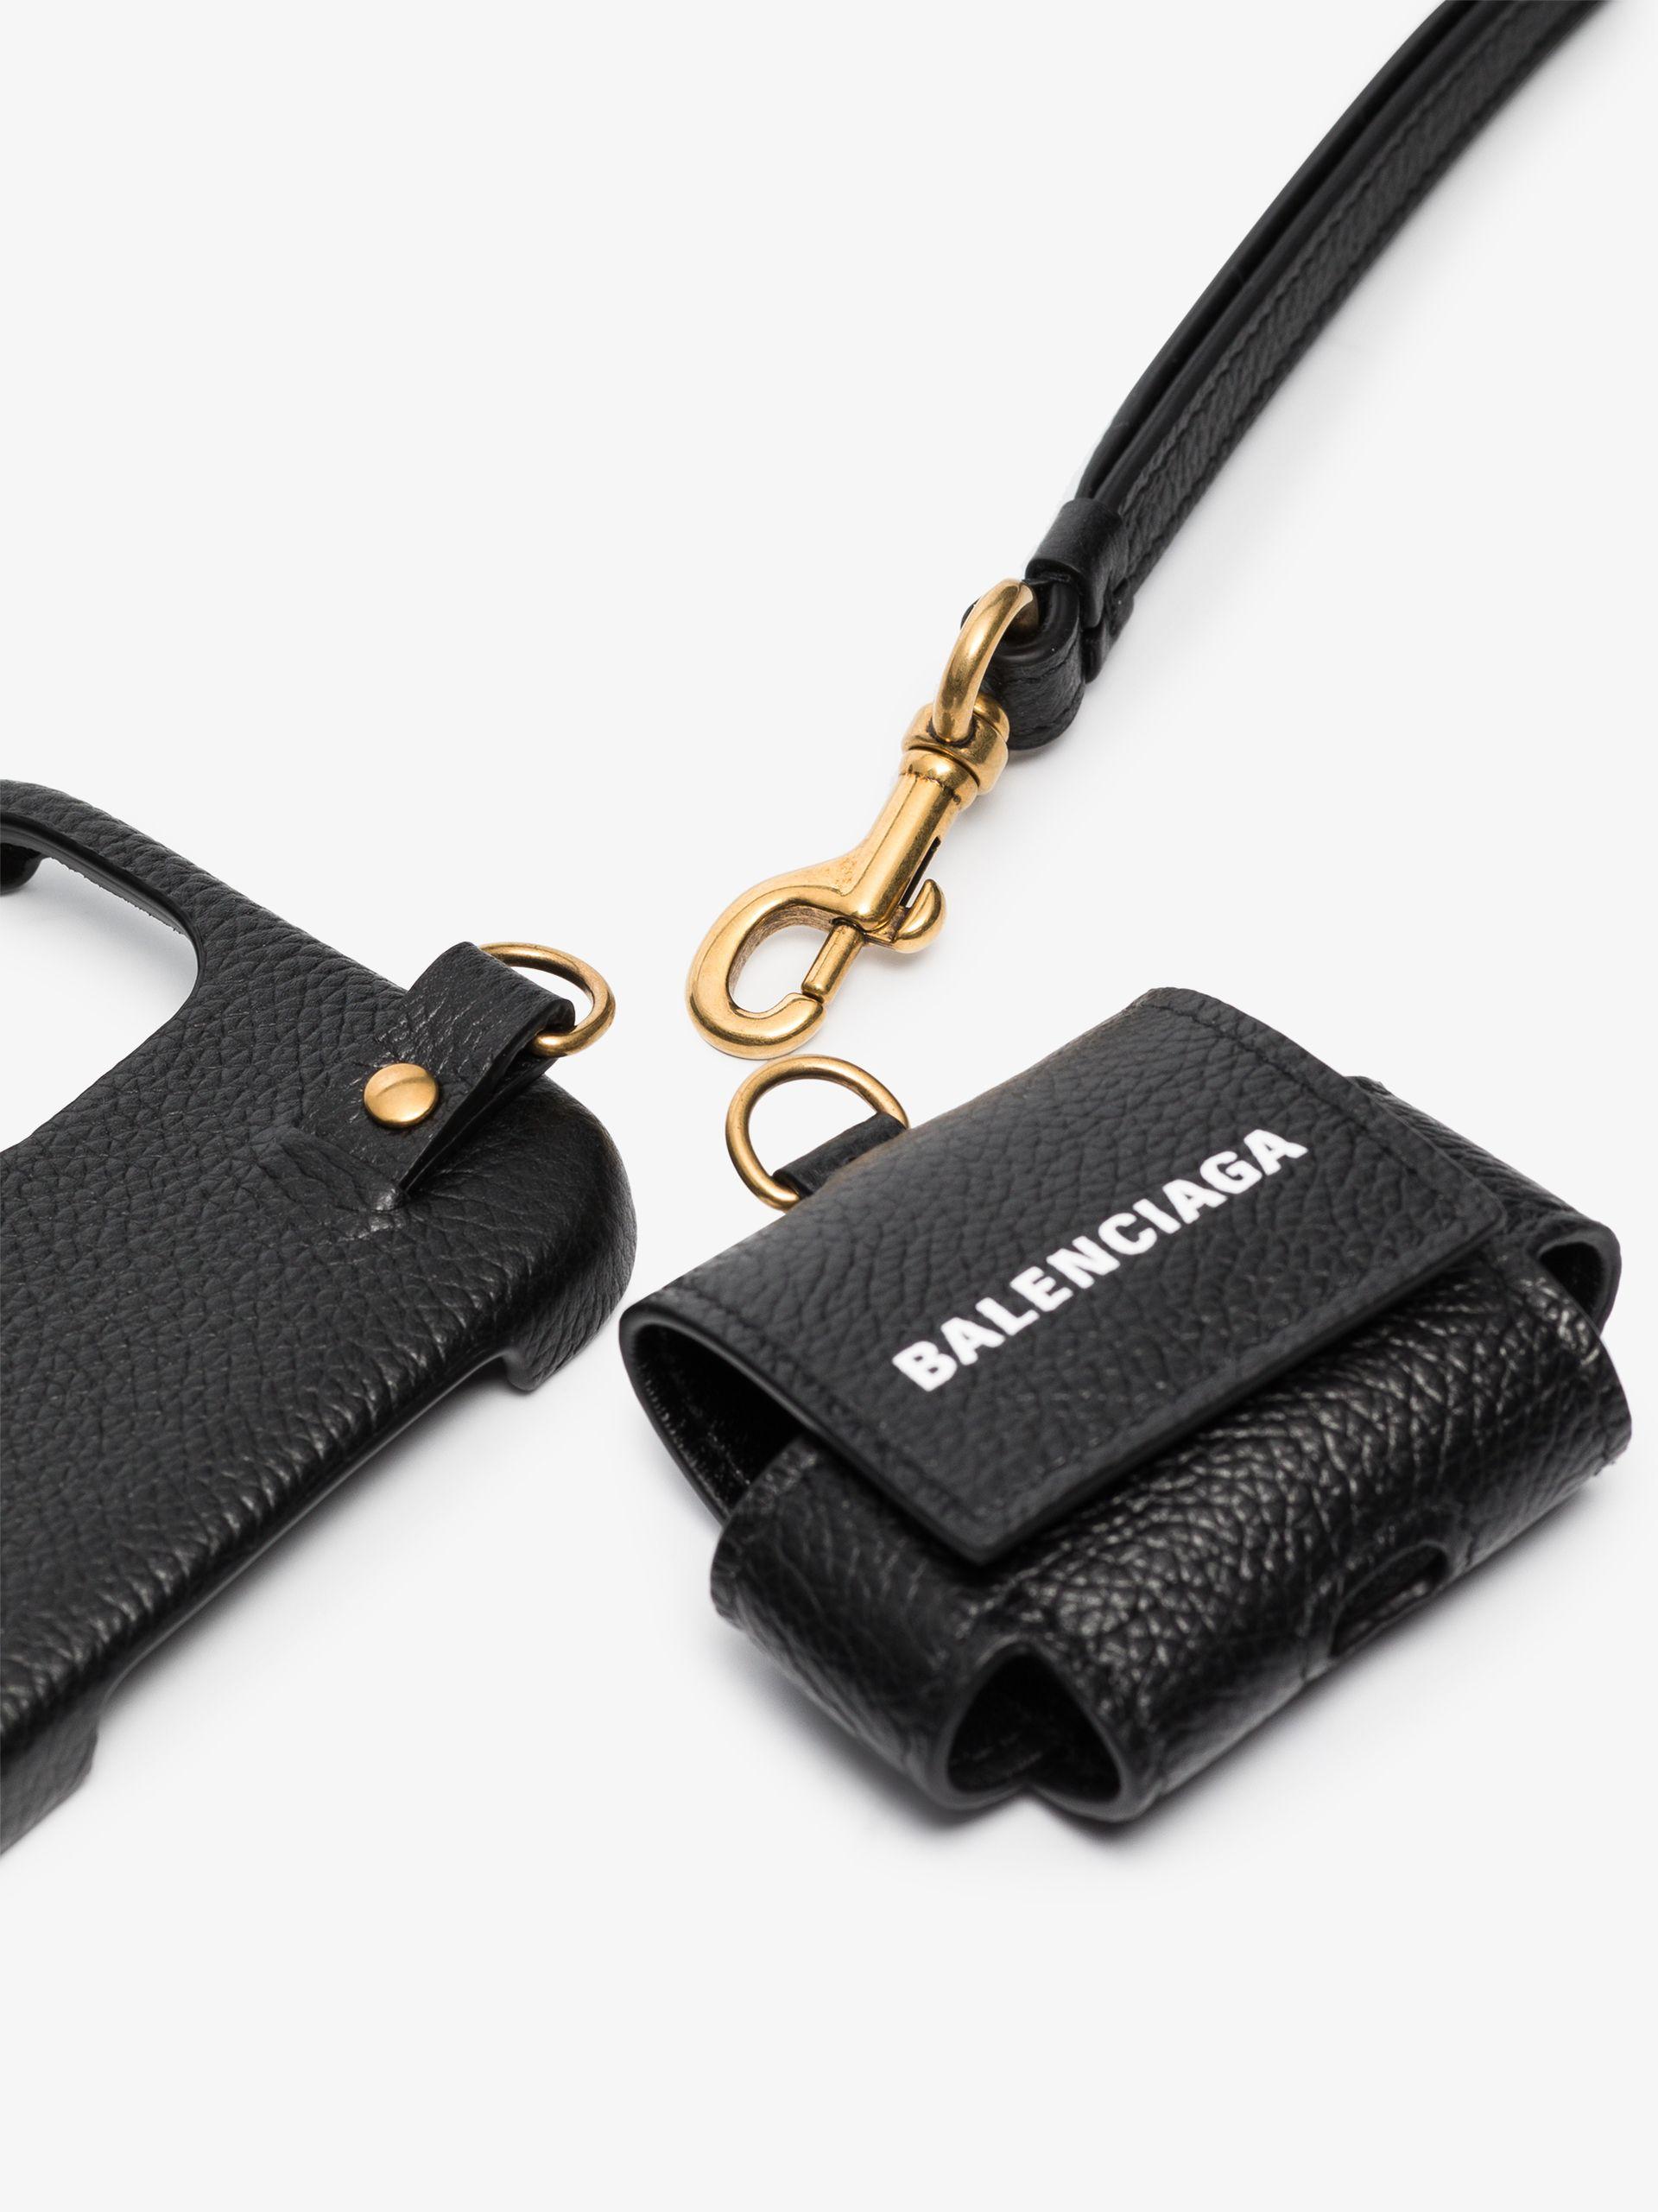 Balenciaga Black Iphone 12 Airpods Case | Lyst